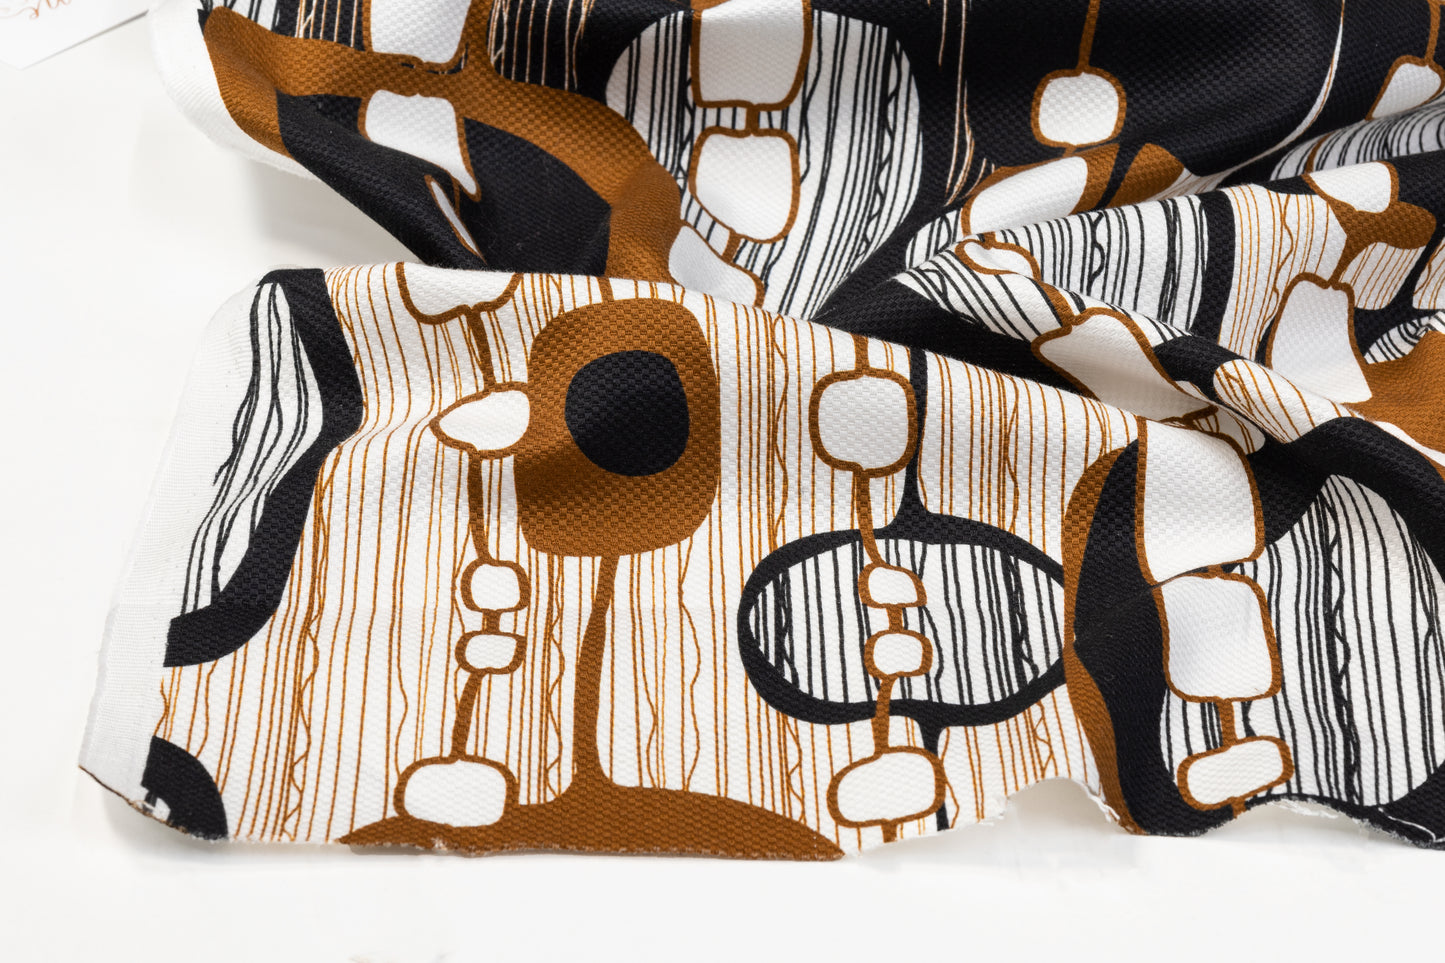 Abstract Printed Italian Cotton Pique - Black, Brown, White